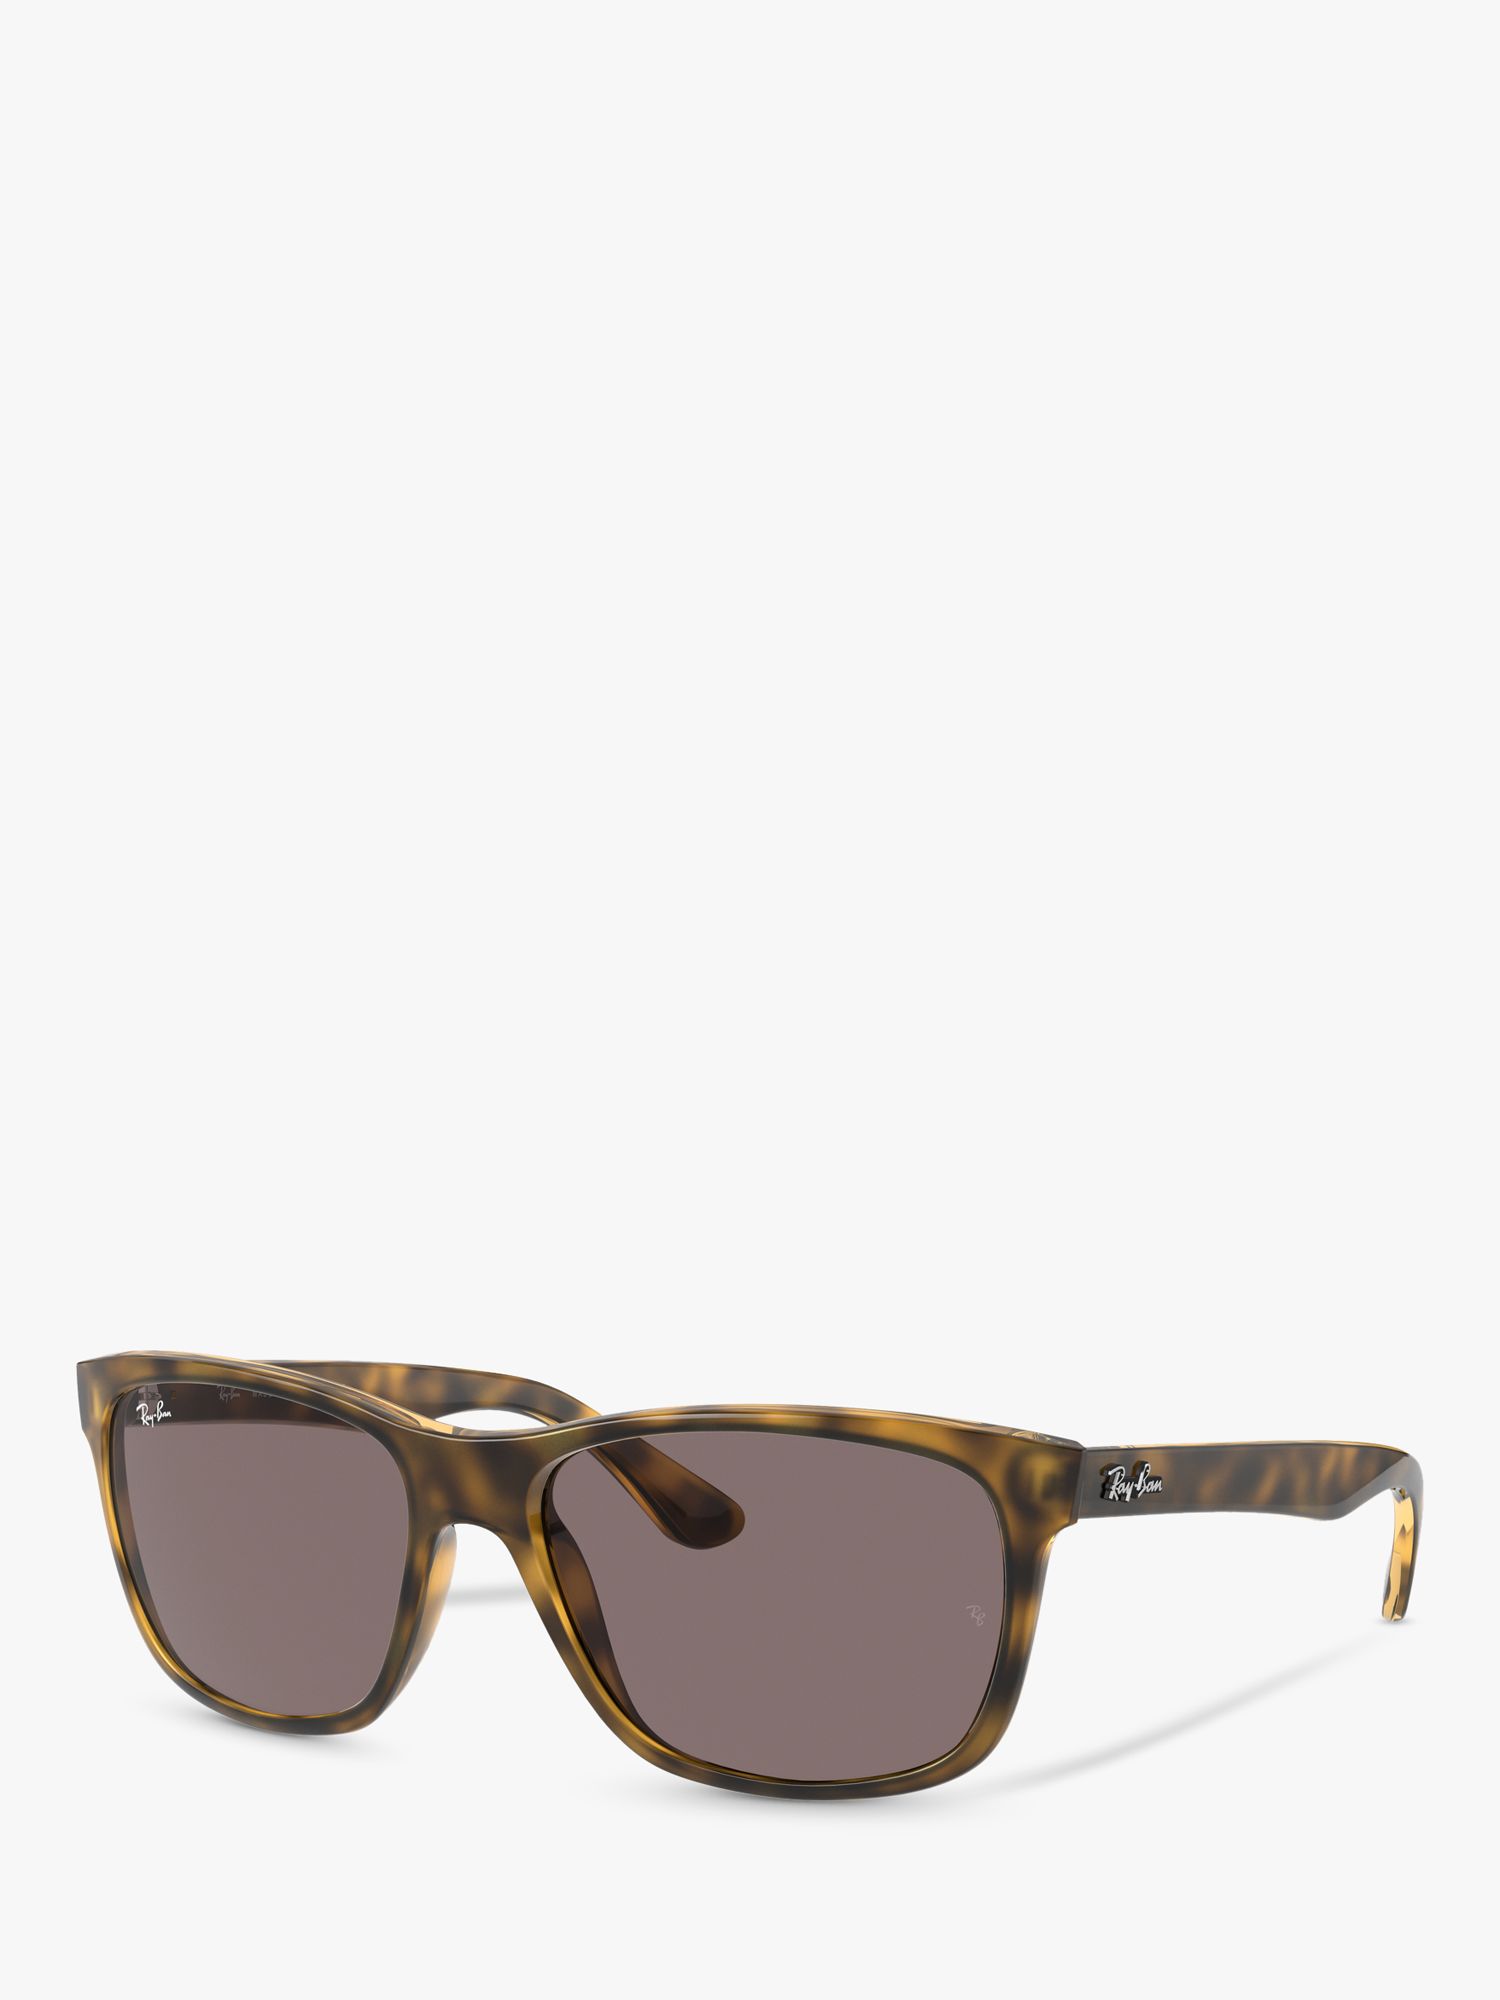 Ray-Ban RB4181 Men's Square Tortoiseshell Sunglasses, Light Havana/Classic  Violet